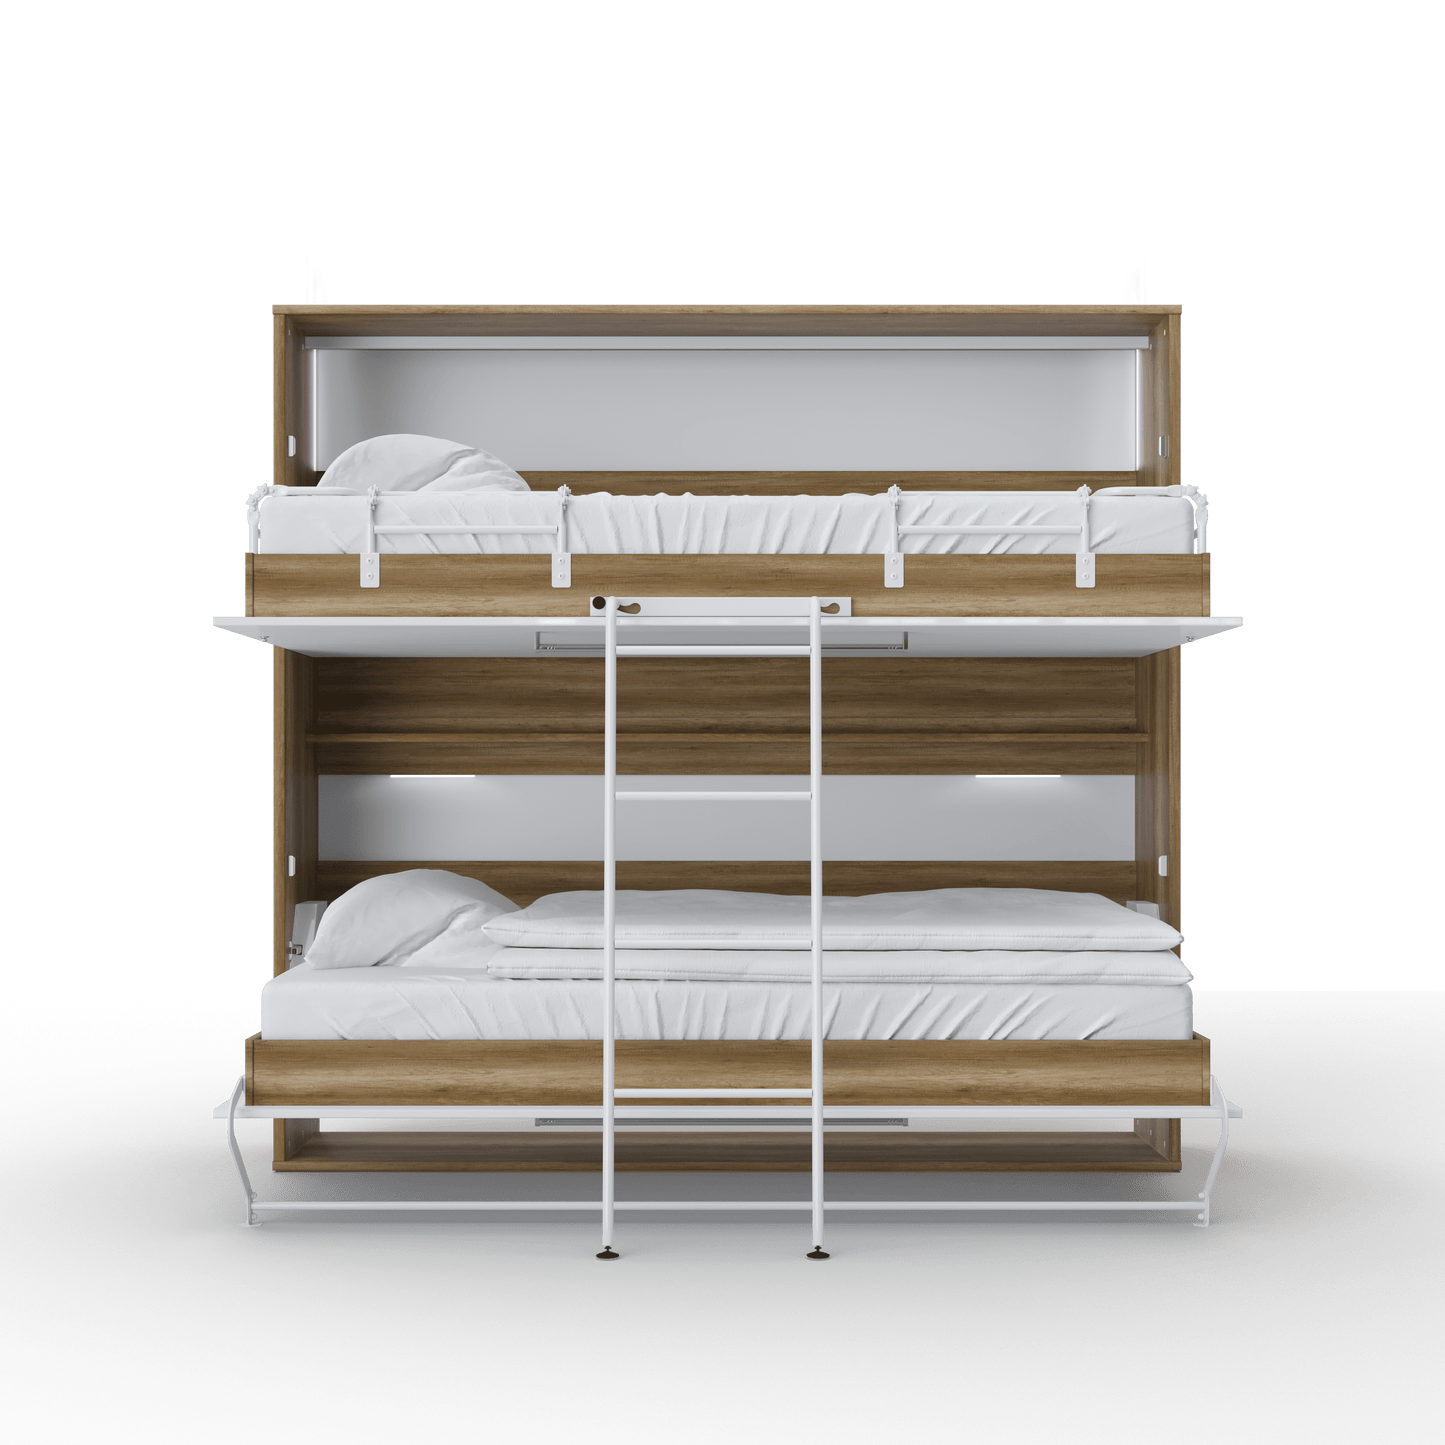 Maxima House Murphy Bunk Bed OTIS European TWIN size with mattresses